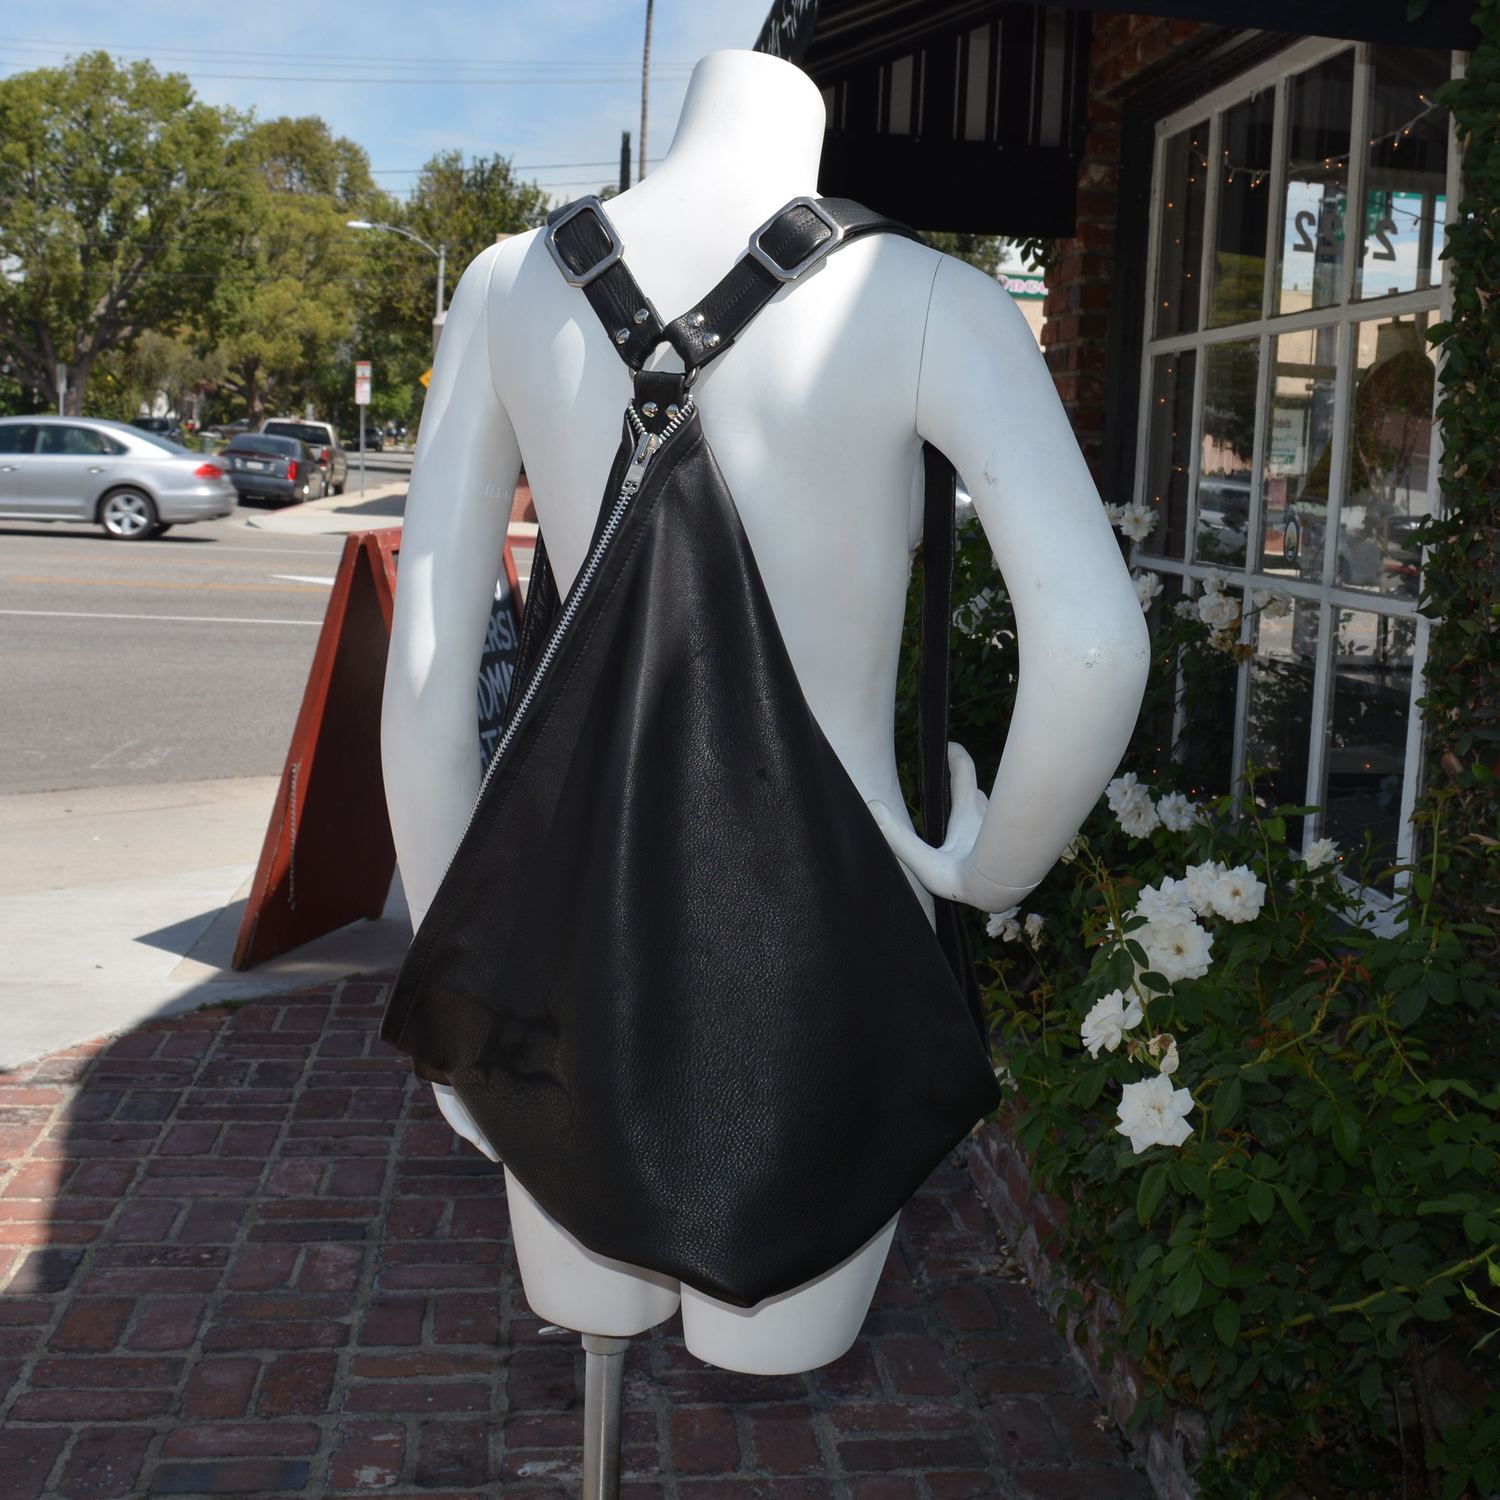 Fashion Ladies Black Leather Custom Backpacks for Women Cowhide